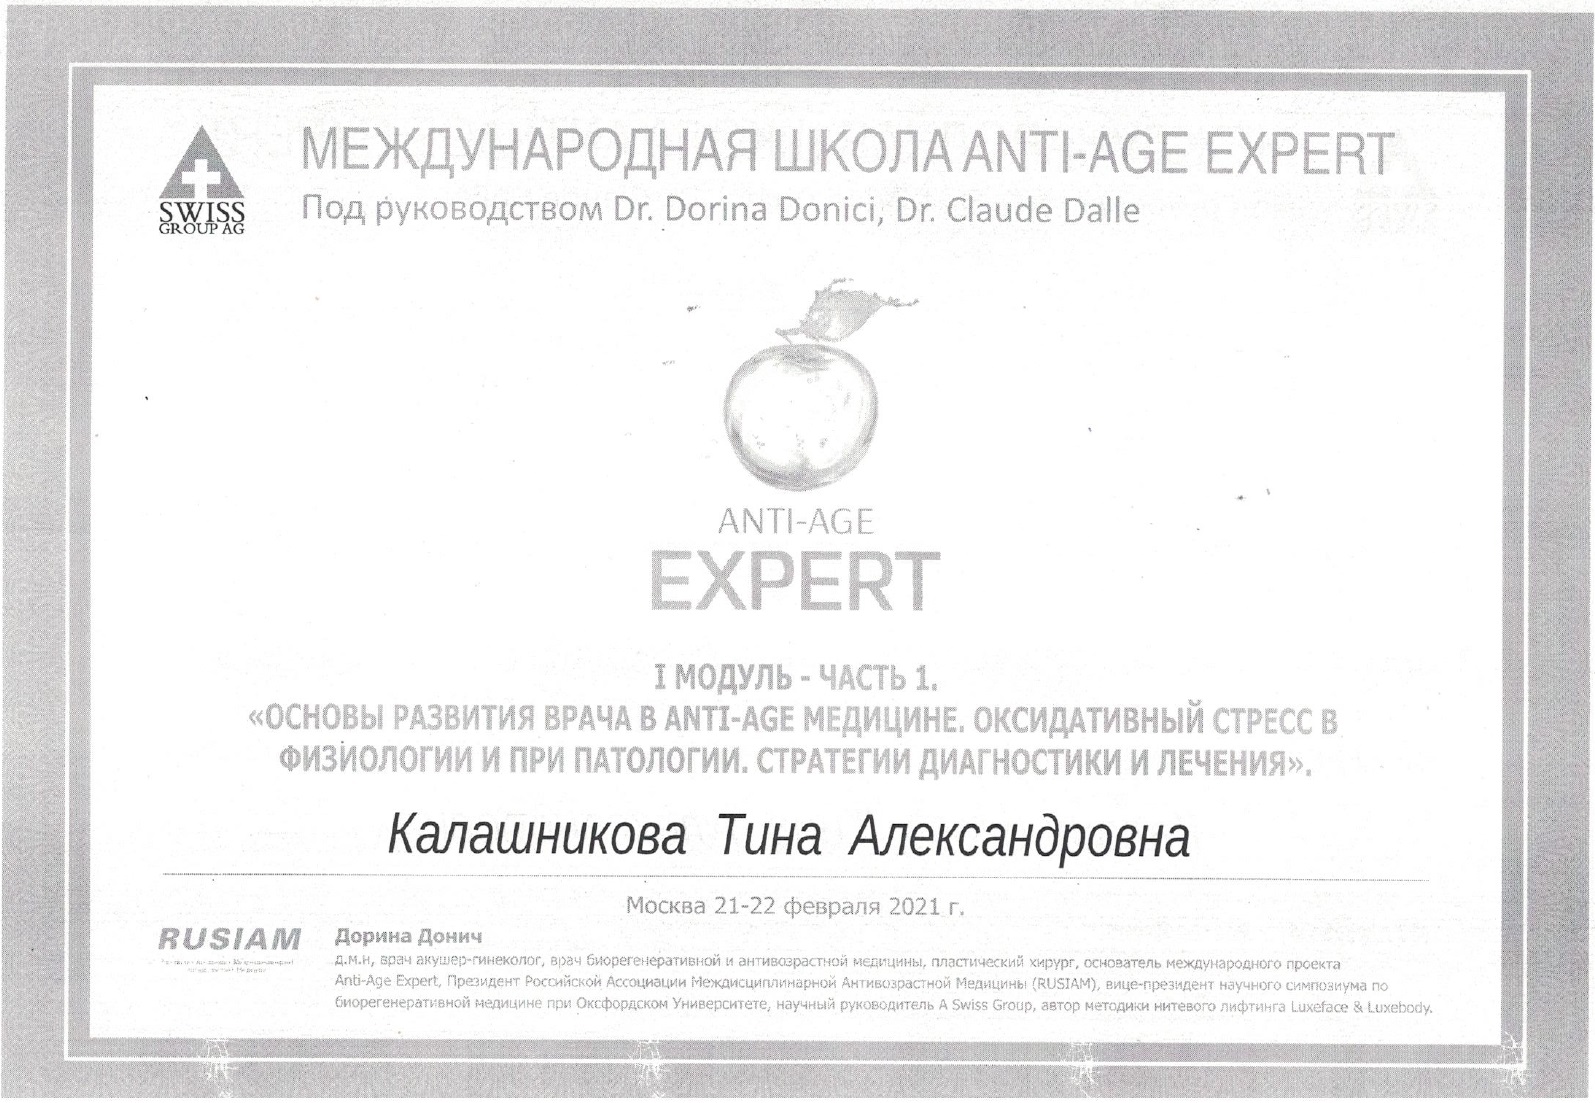 Скан сертификата anti-age expert, модуль 1, Калашникова Т. А.